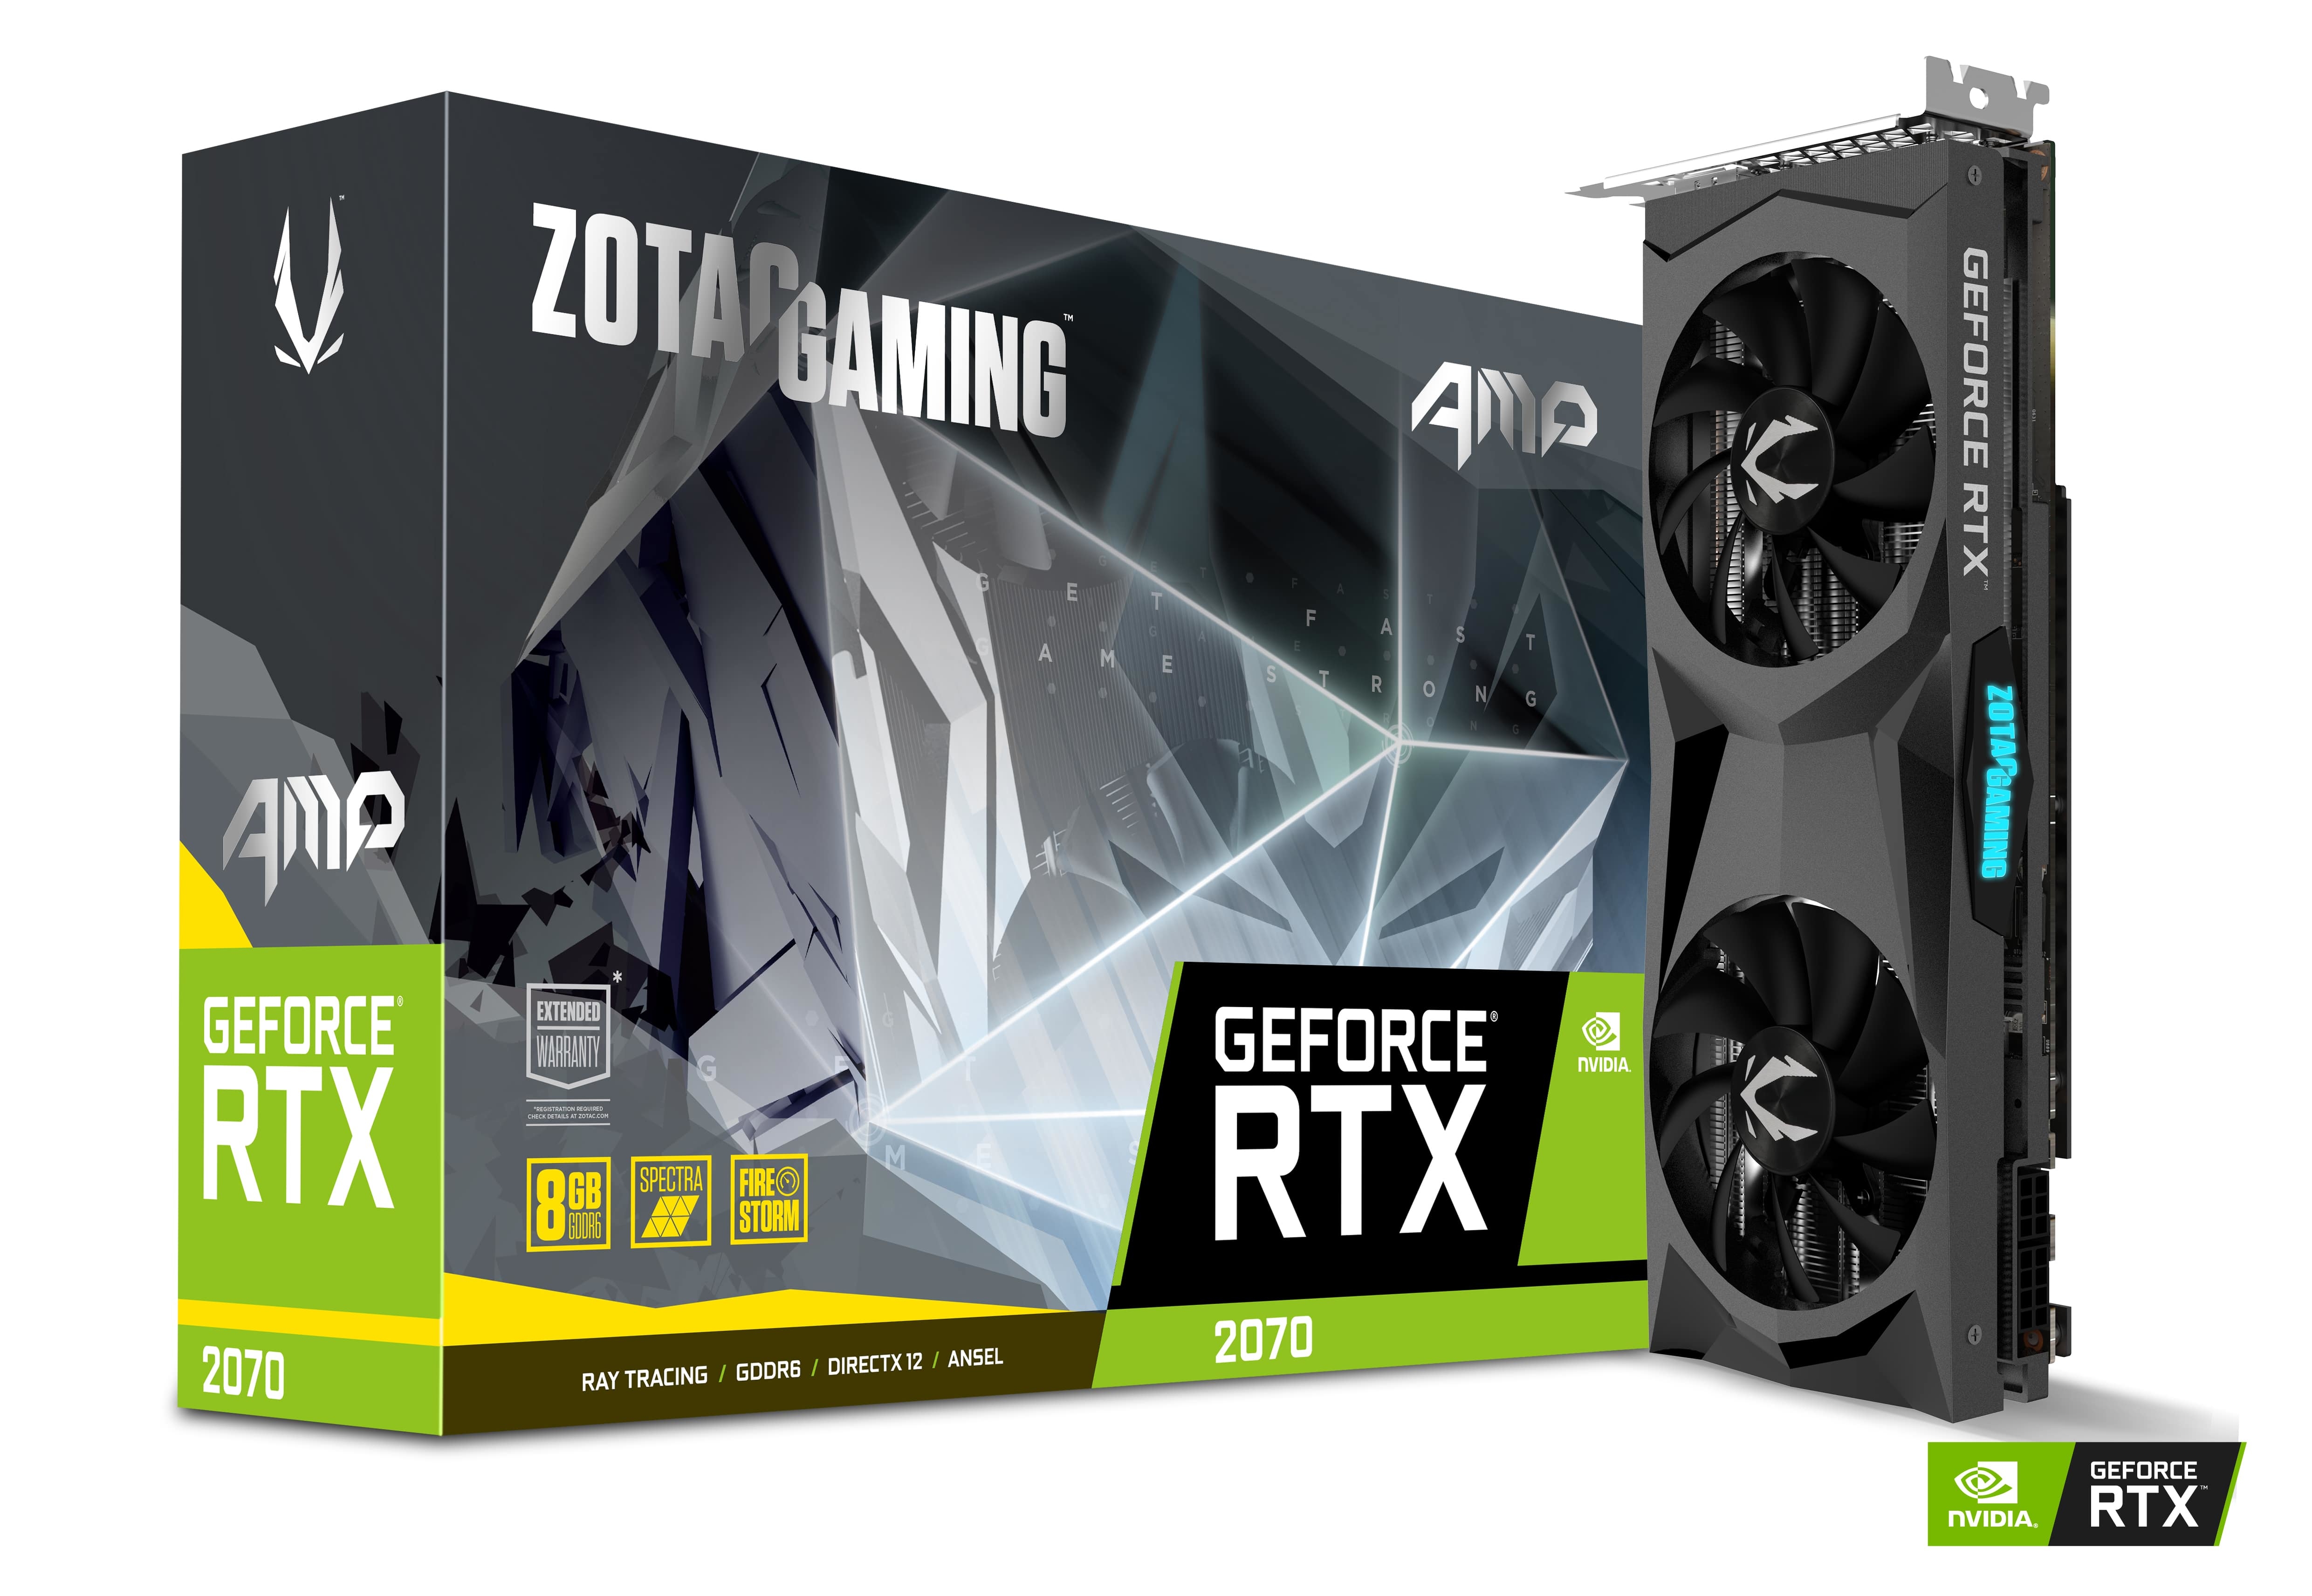 ZOTAC GAMING GeForce RTX 2070 AMP | ZOTAC